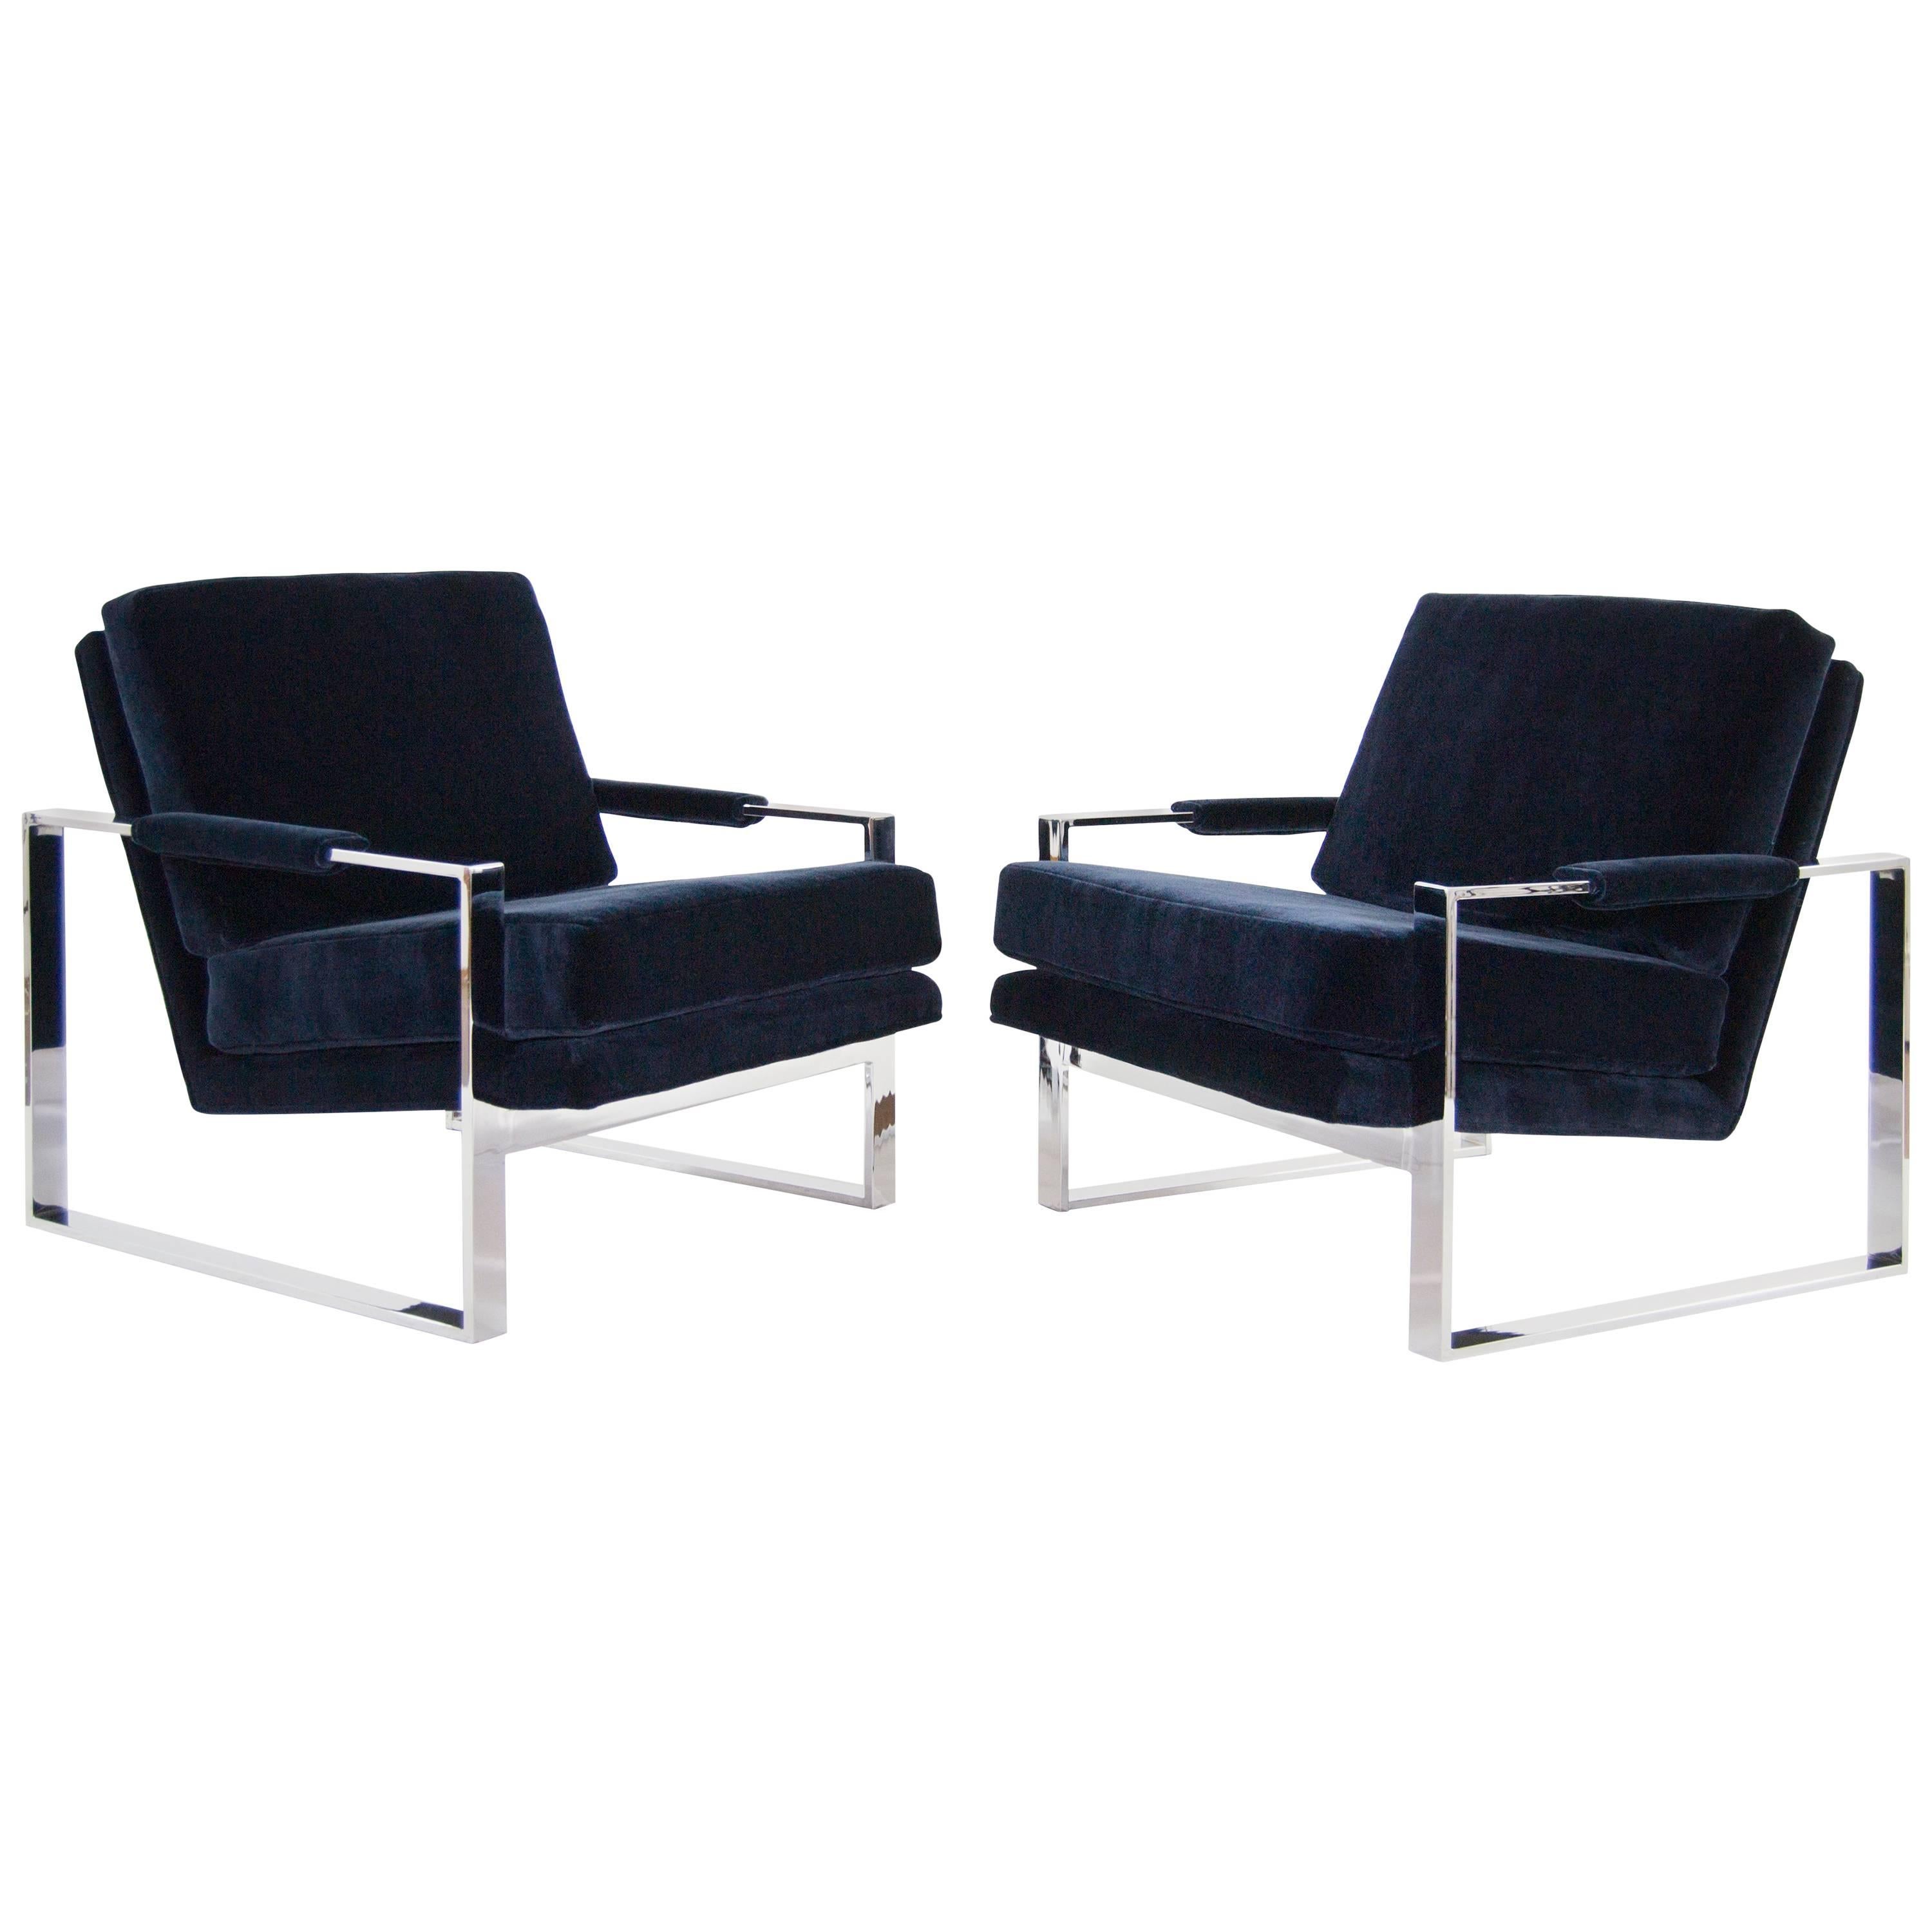 Pair of Chrome Flat Bar Lounge Chairs by Milo Baughman